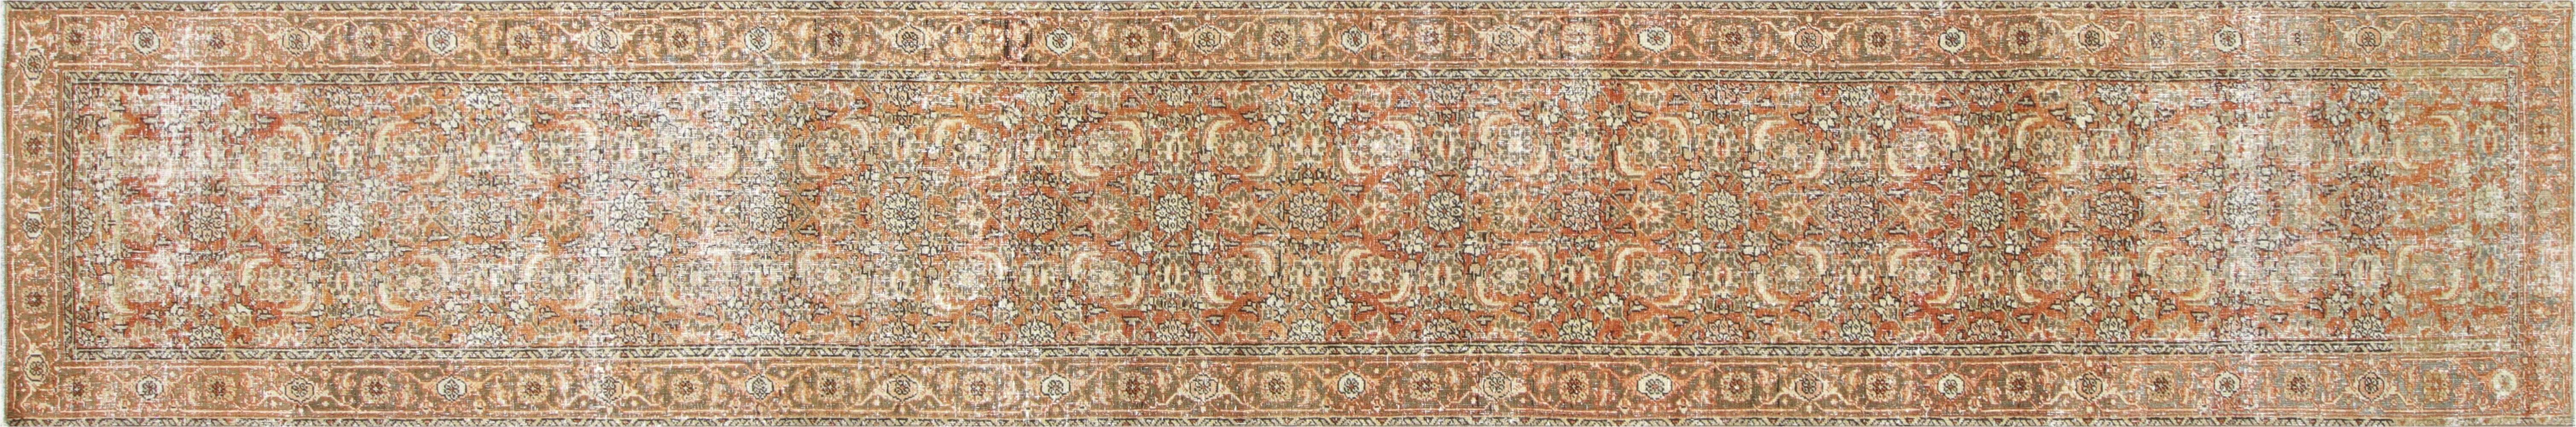 Semi Antique Persian Tabriz Carpet - 2'9" x 17'